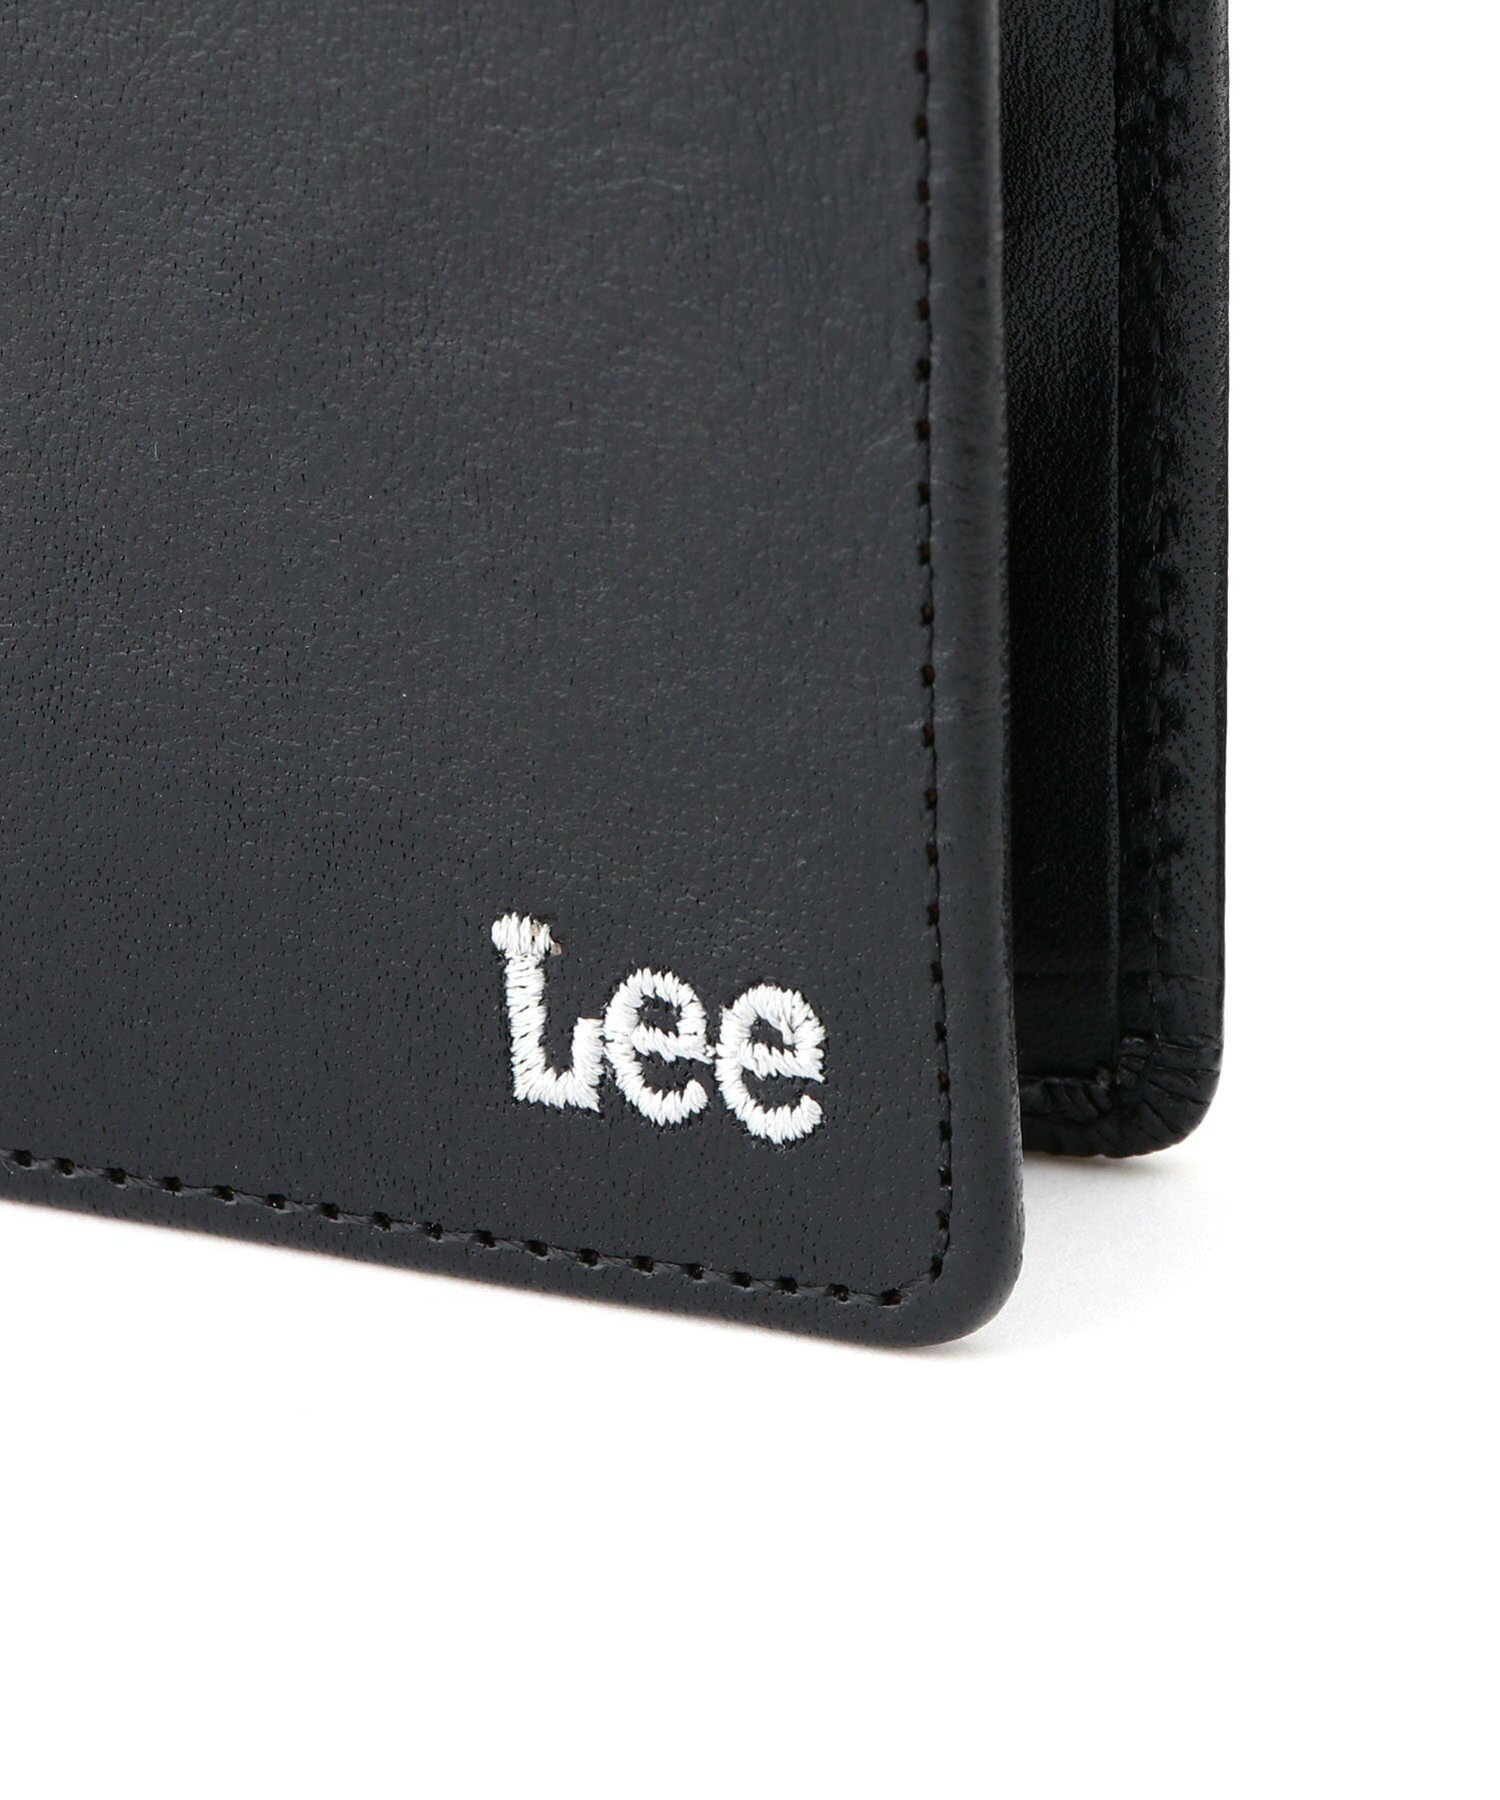 Lee 二つ折り 財布 コンパクト メンズ レディース レザー